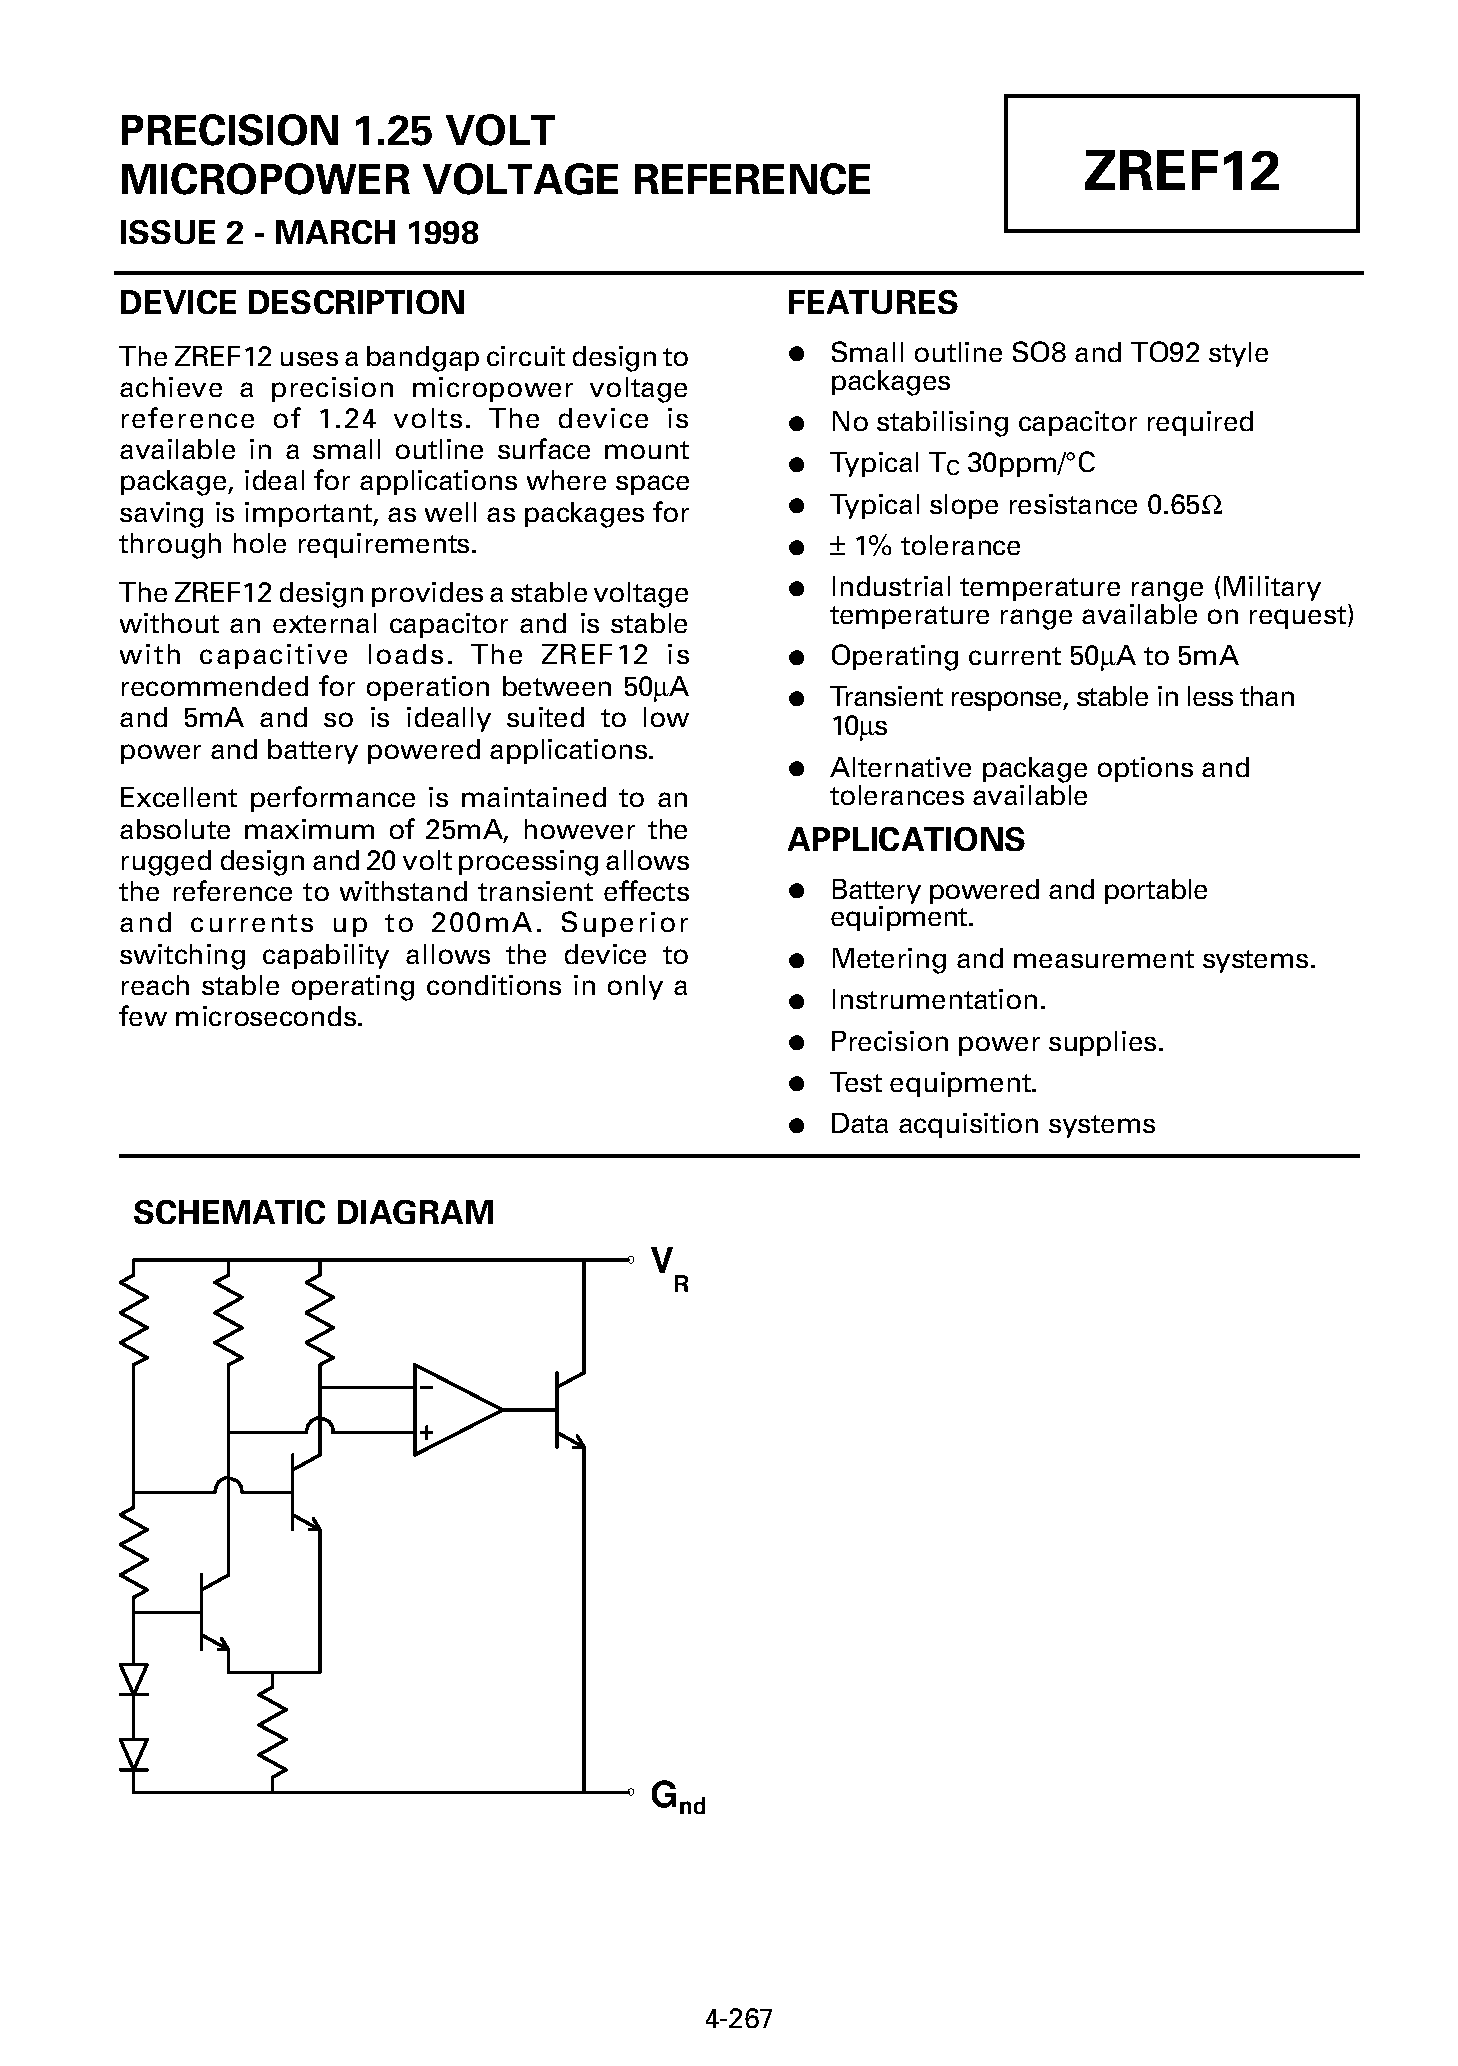 Datasheet ZREF12 - PRECISION 1.25 VOLT MICROPOWER VOLTAGE REFERENCE page 1